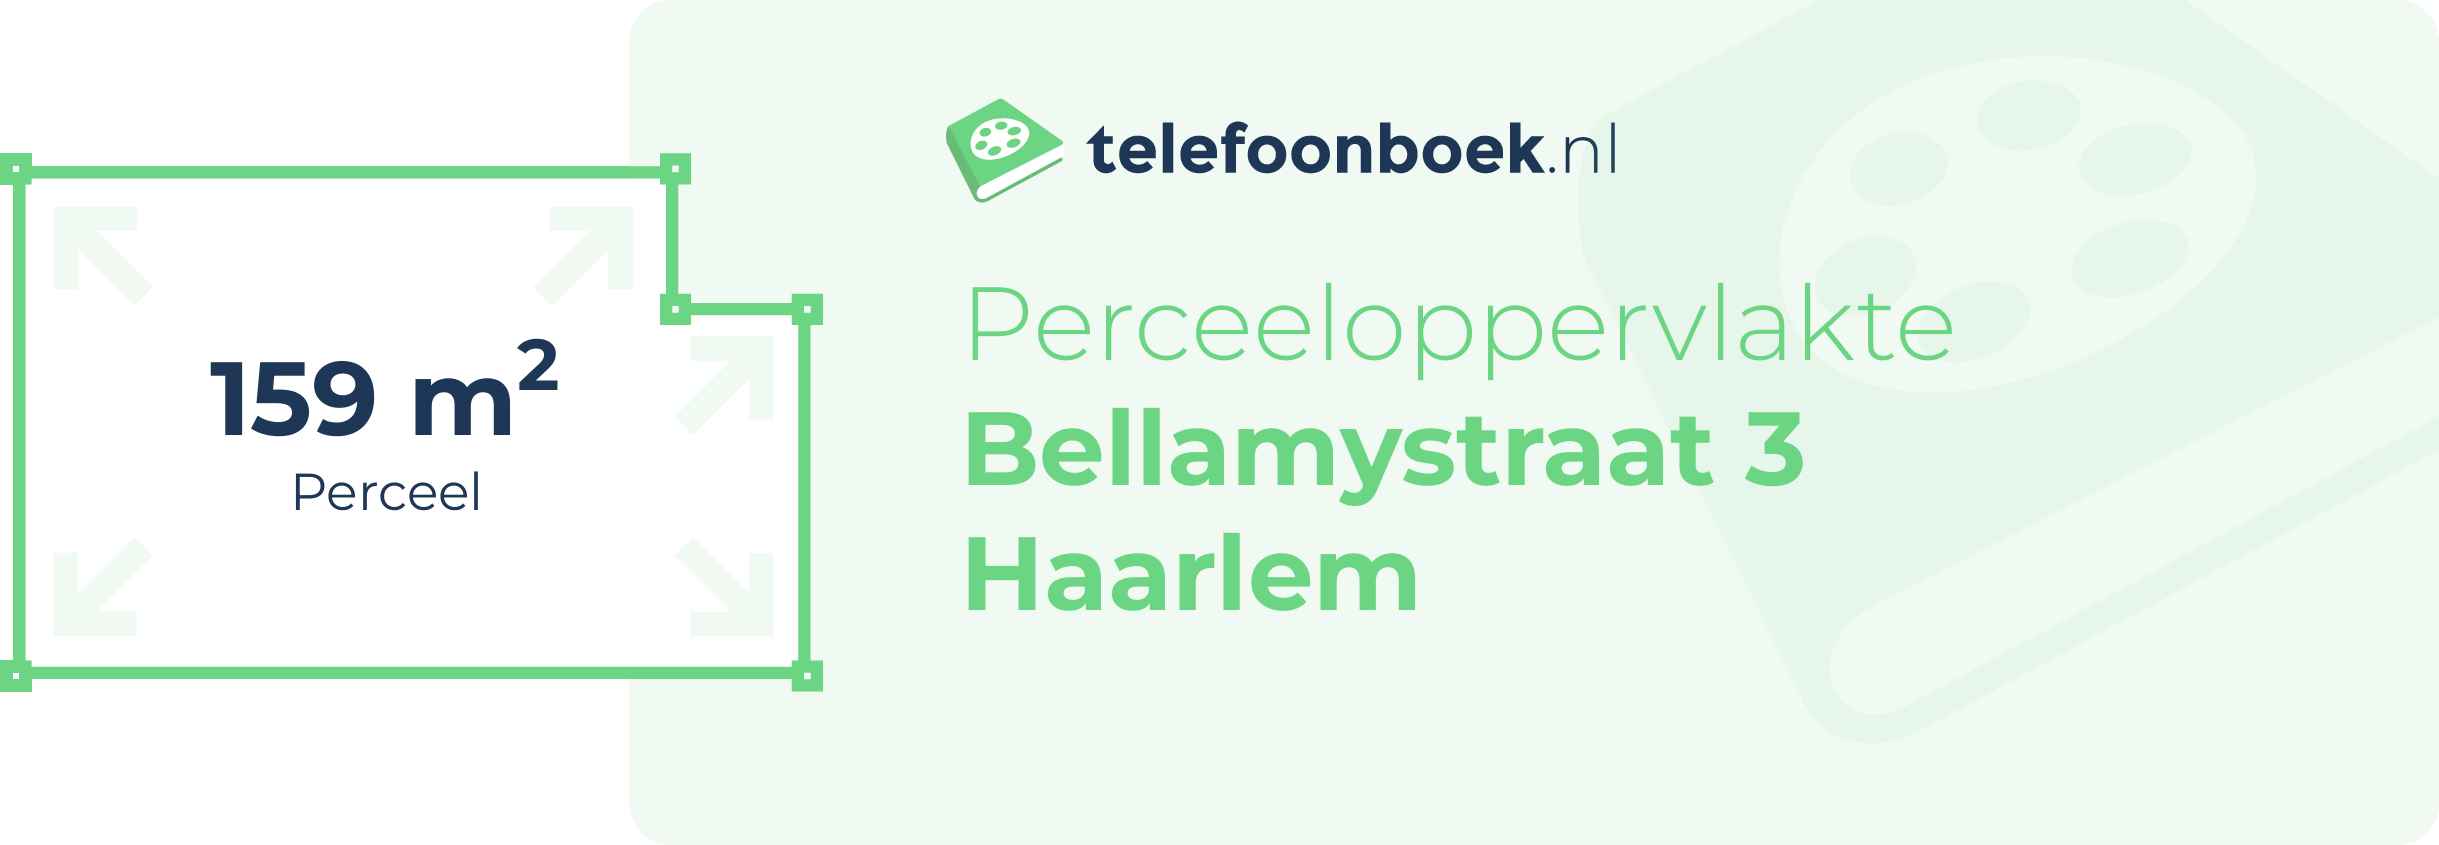 Perceeloppervlakte Bellamystraat 3 Haarlem